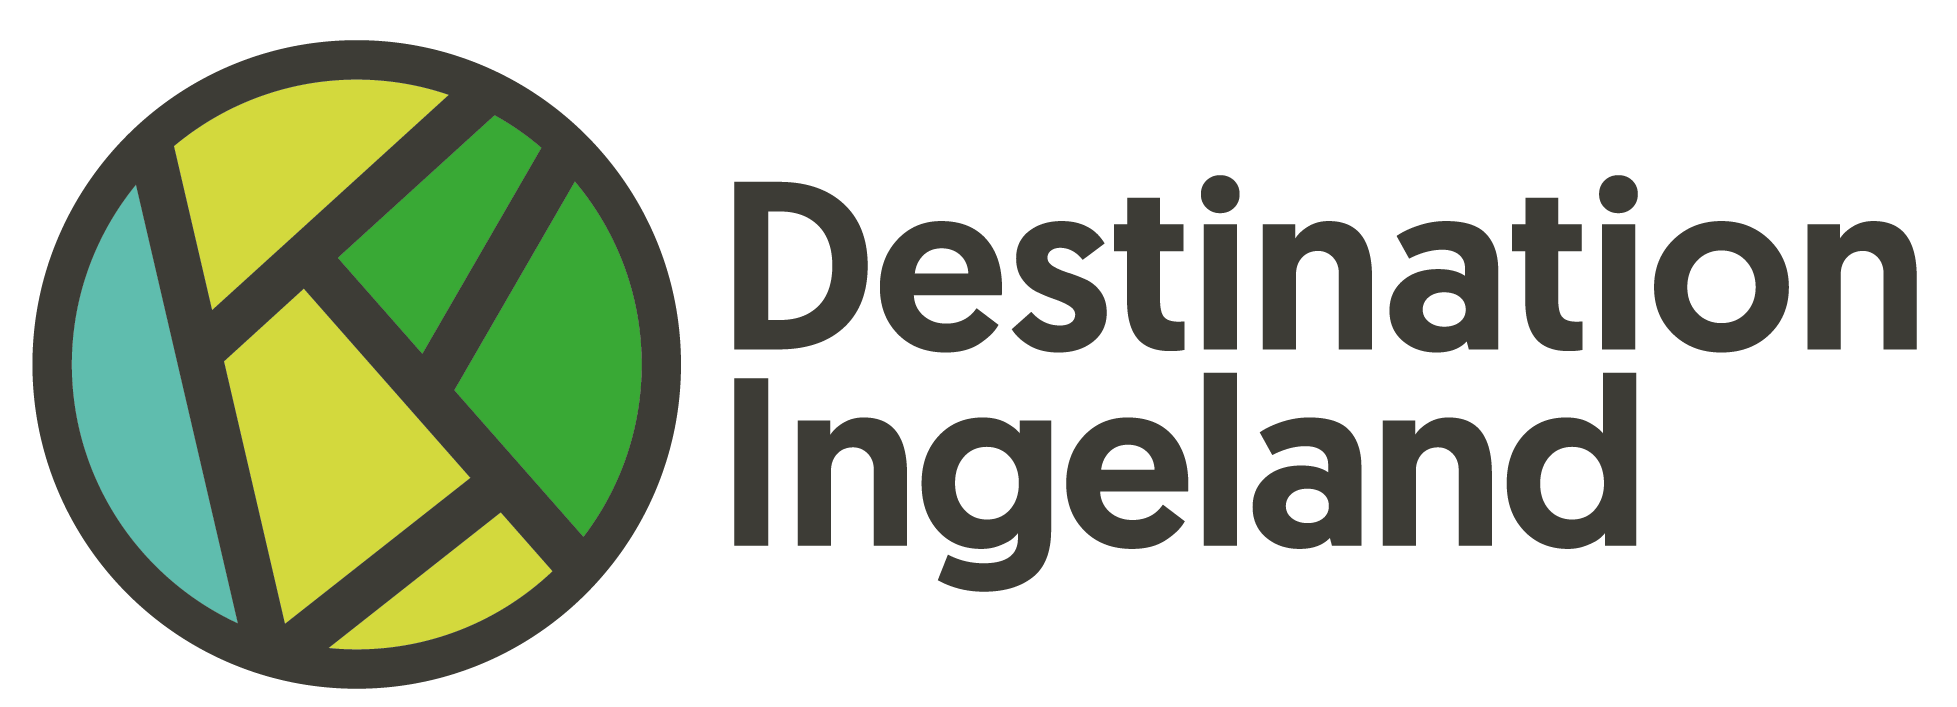 Destination Ingeland Logotype